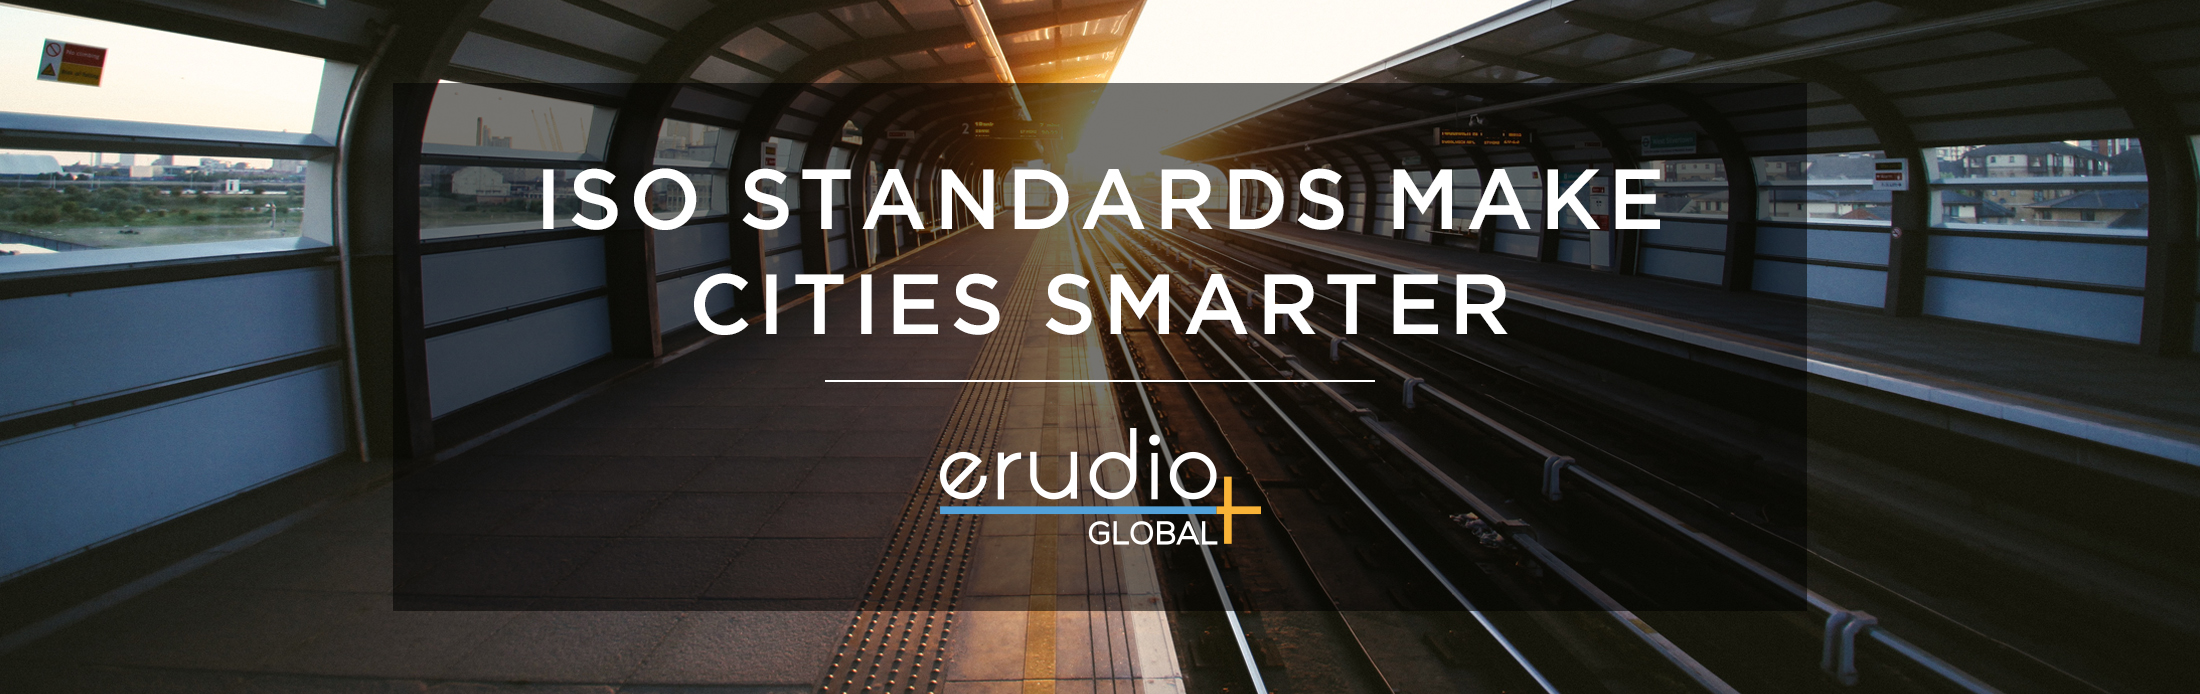 ISO Standards Make Cities Smarter